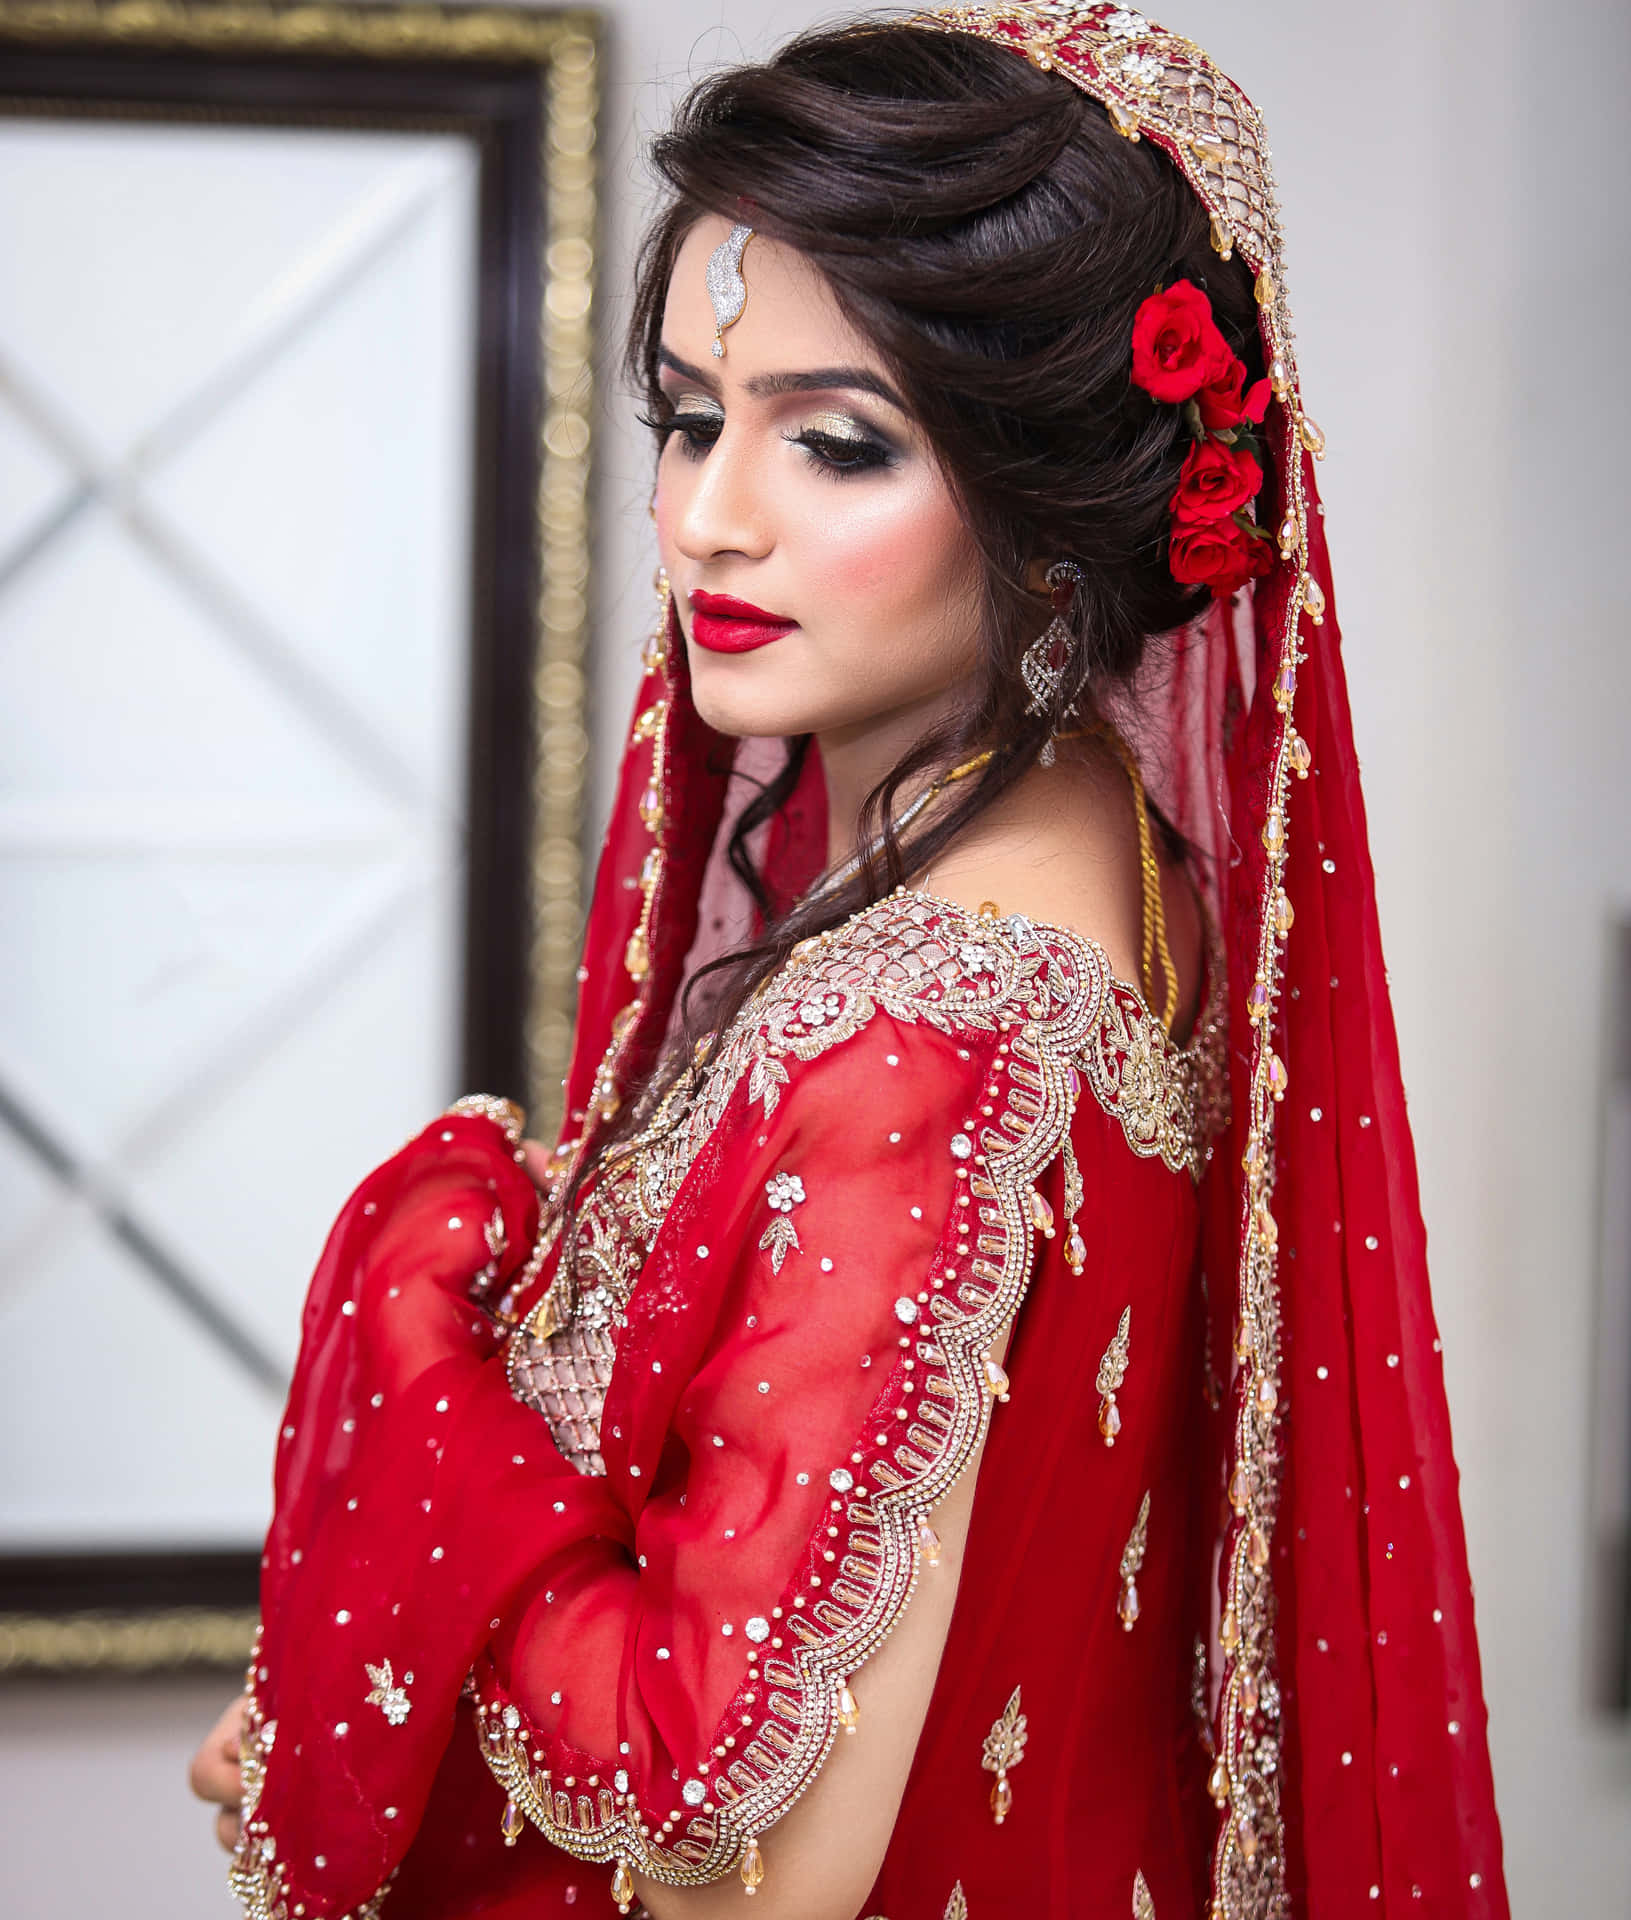 A Beautiful Bride In Red Bridal Wear